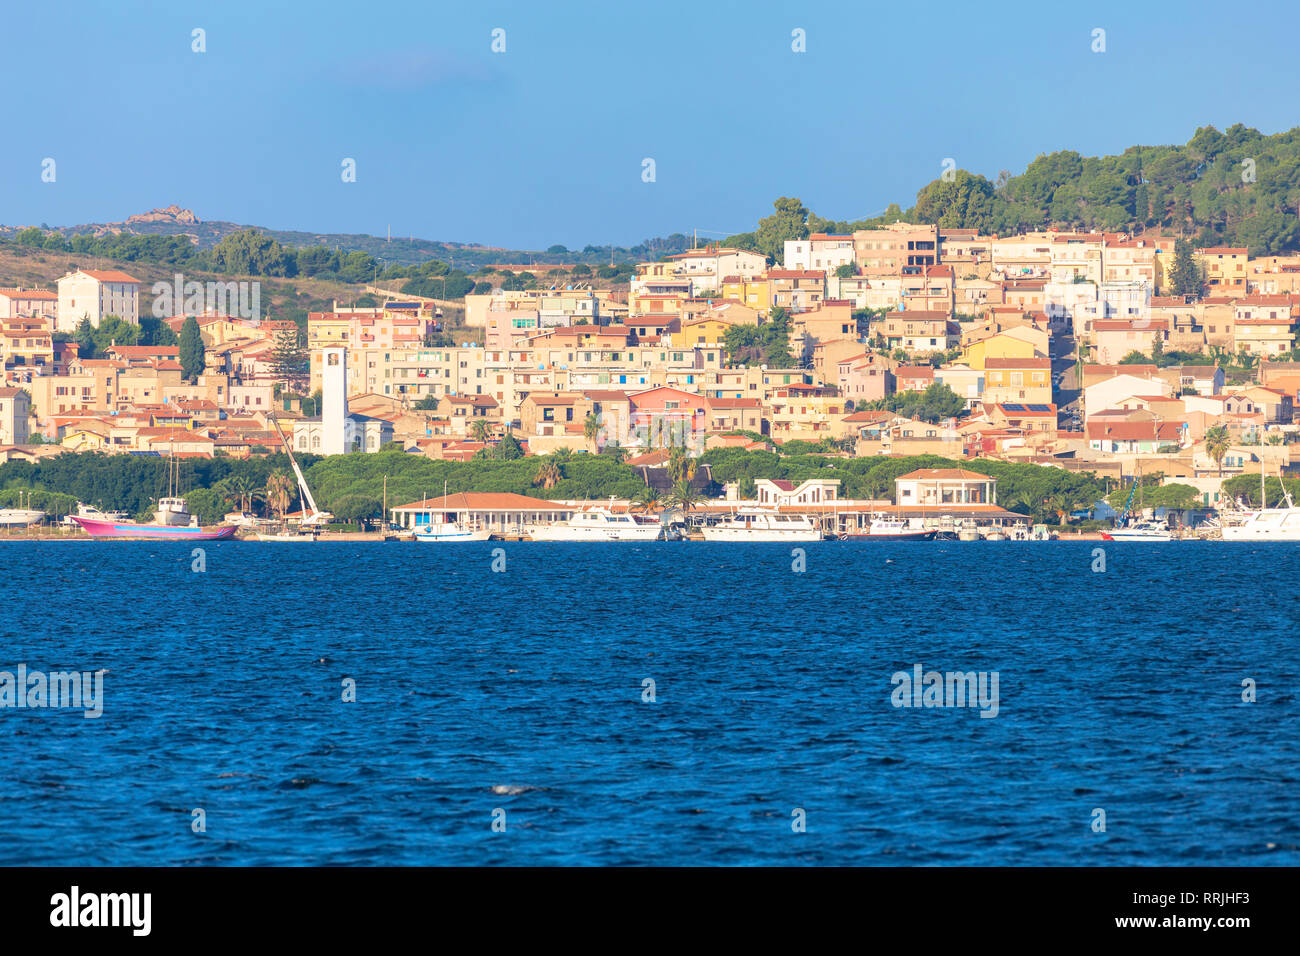 Village of Sant'Antioco, Sant'Antioco Island, Sud Sardegna province, Sardinia, Italy, Mediterranean, Europe Stock Photo